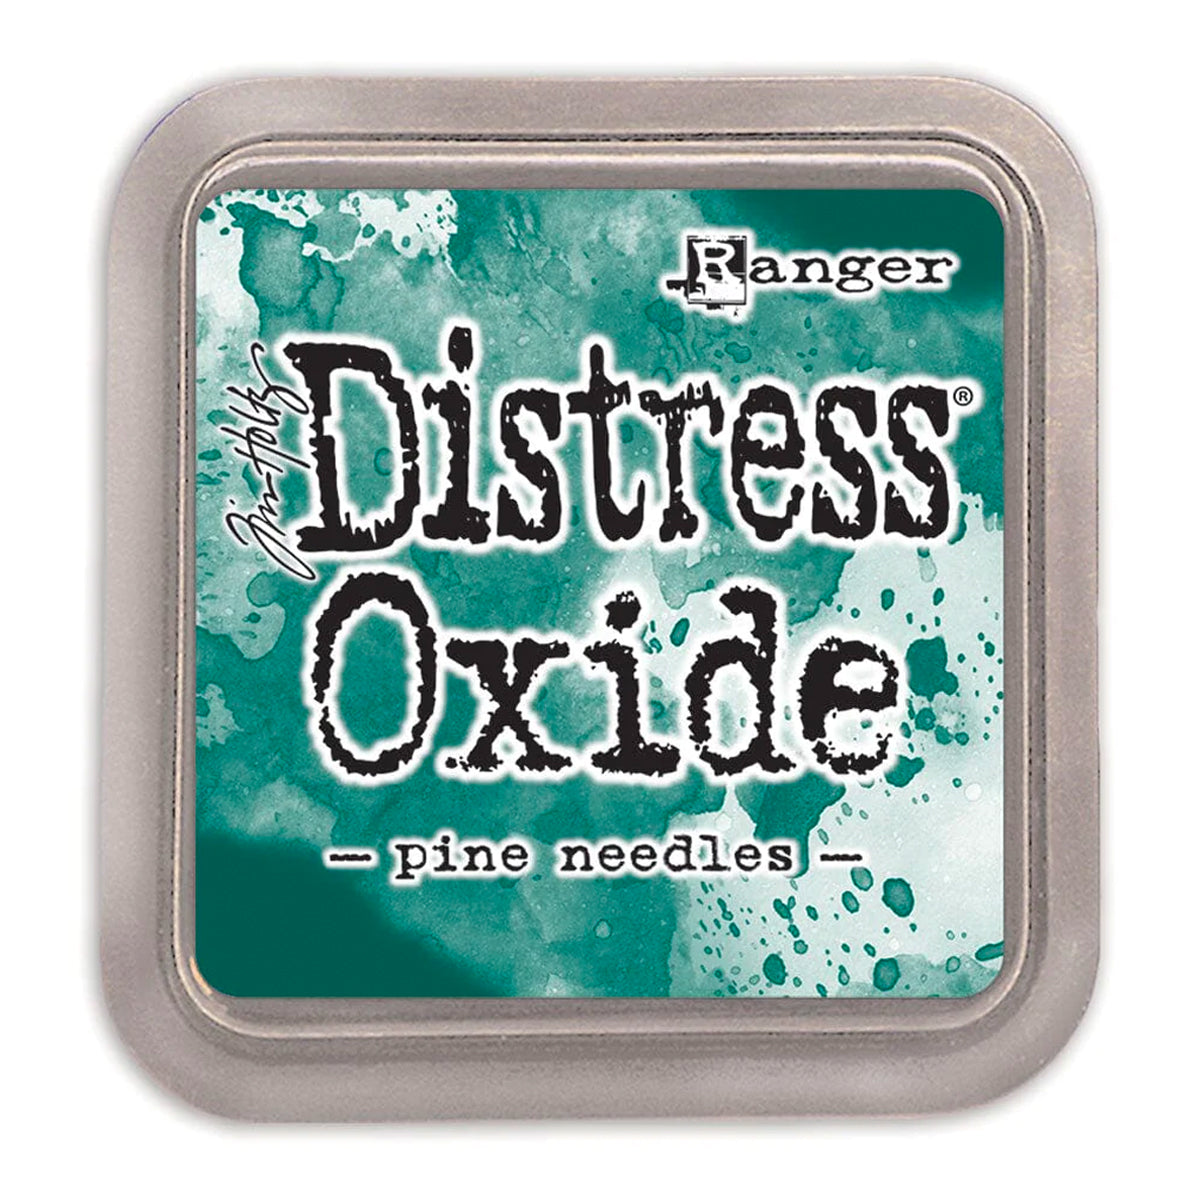 Tim Holtz Distress Oxide Ink Pad - Pine Needles